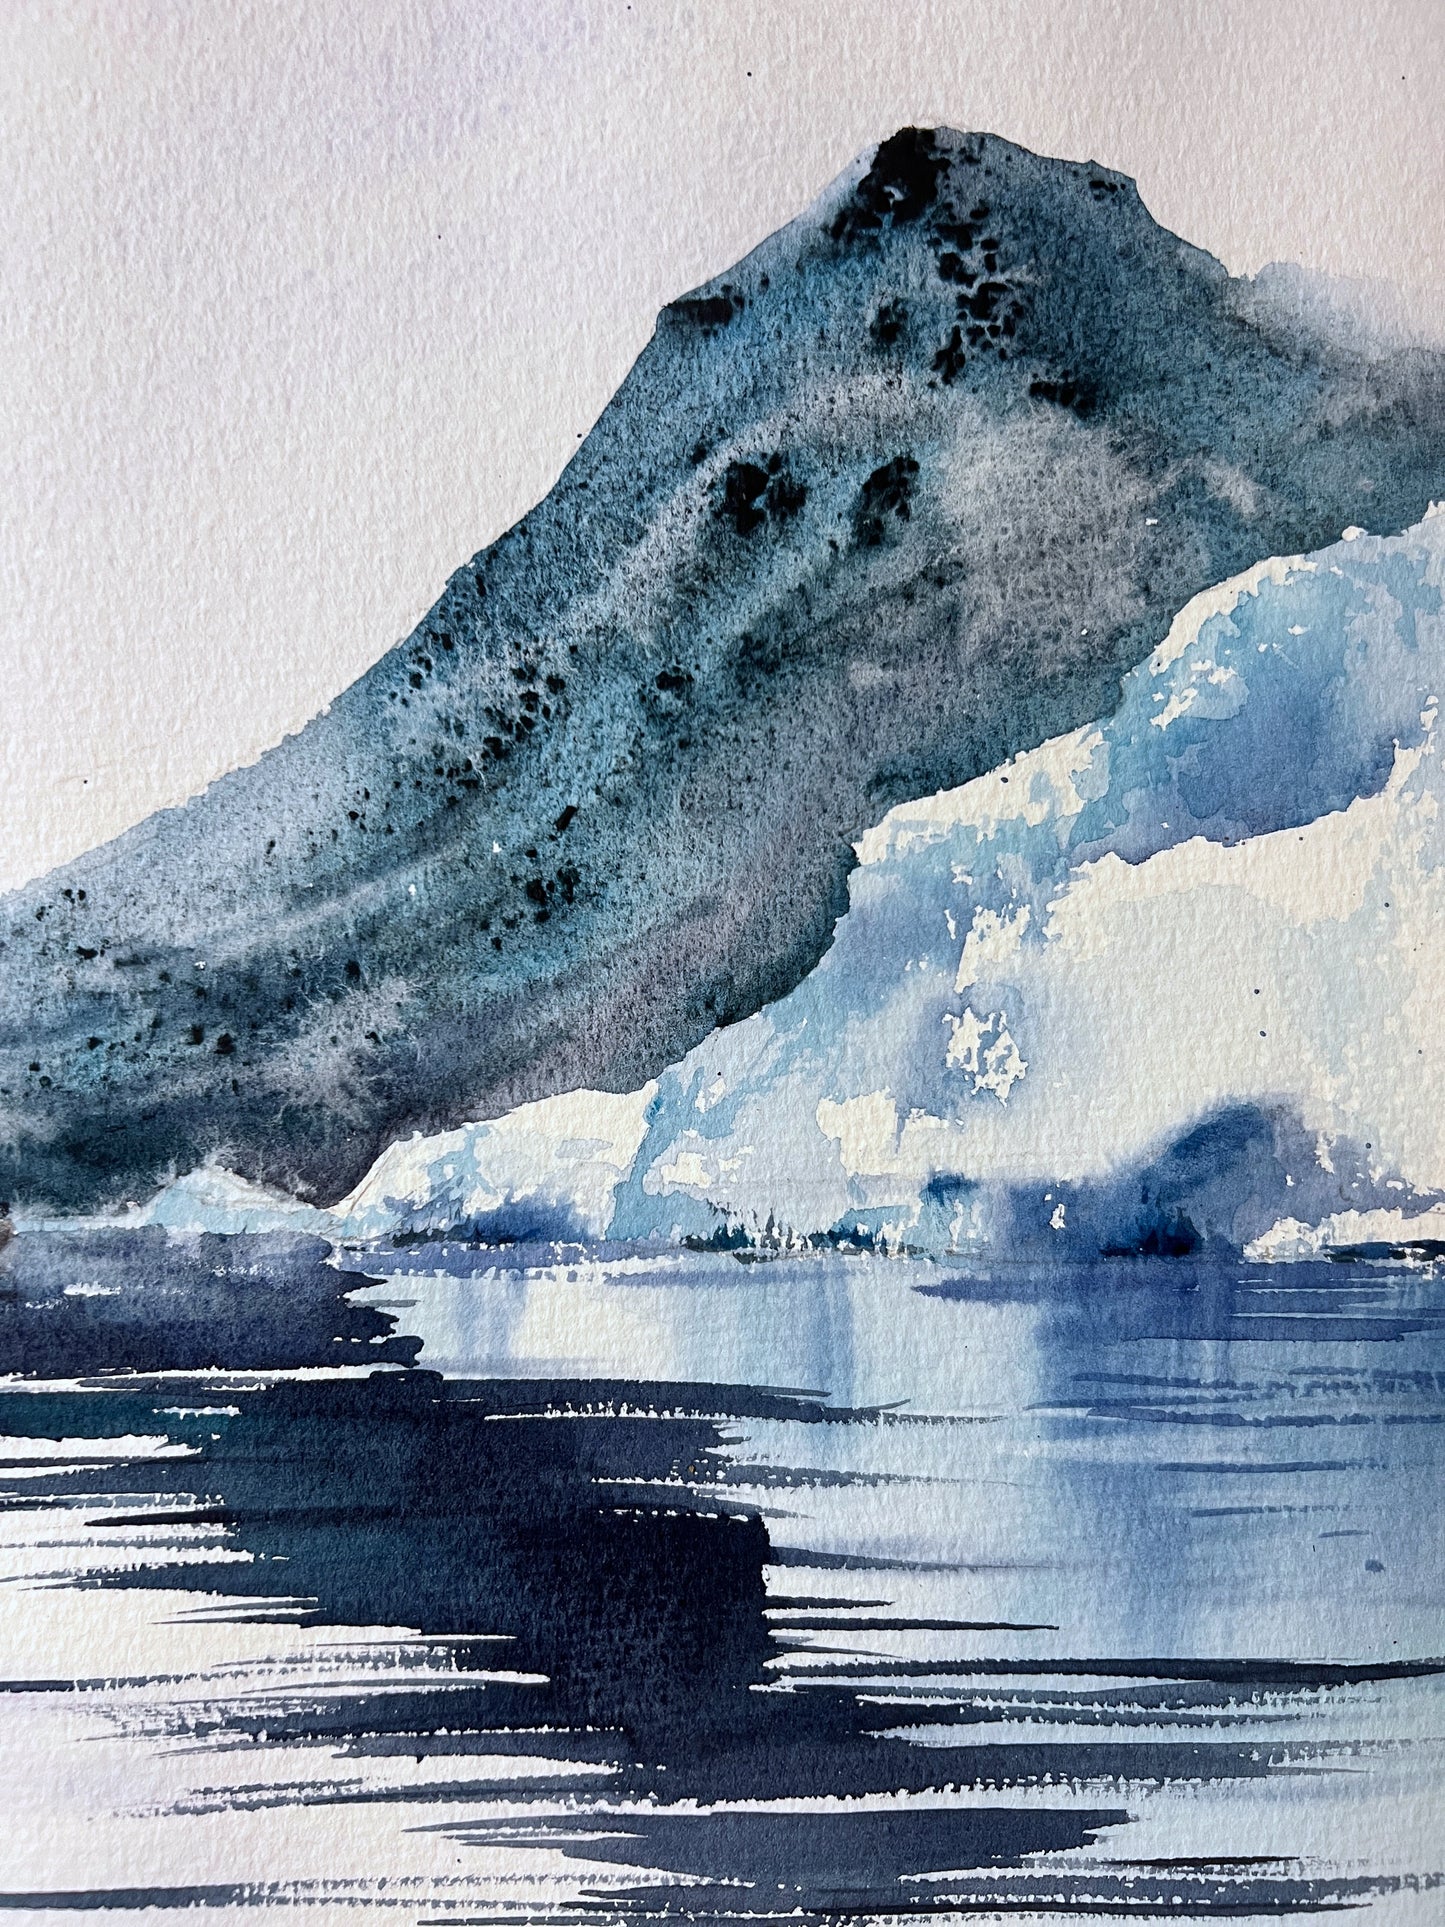 Arctic Painting Original, Seascape, Antarctic Iceberg, Adventure Travel Gift, Watercolor Wall Art Decor